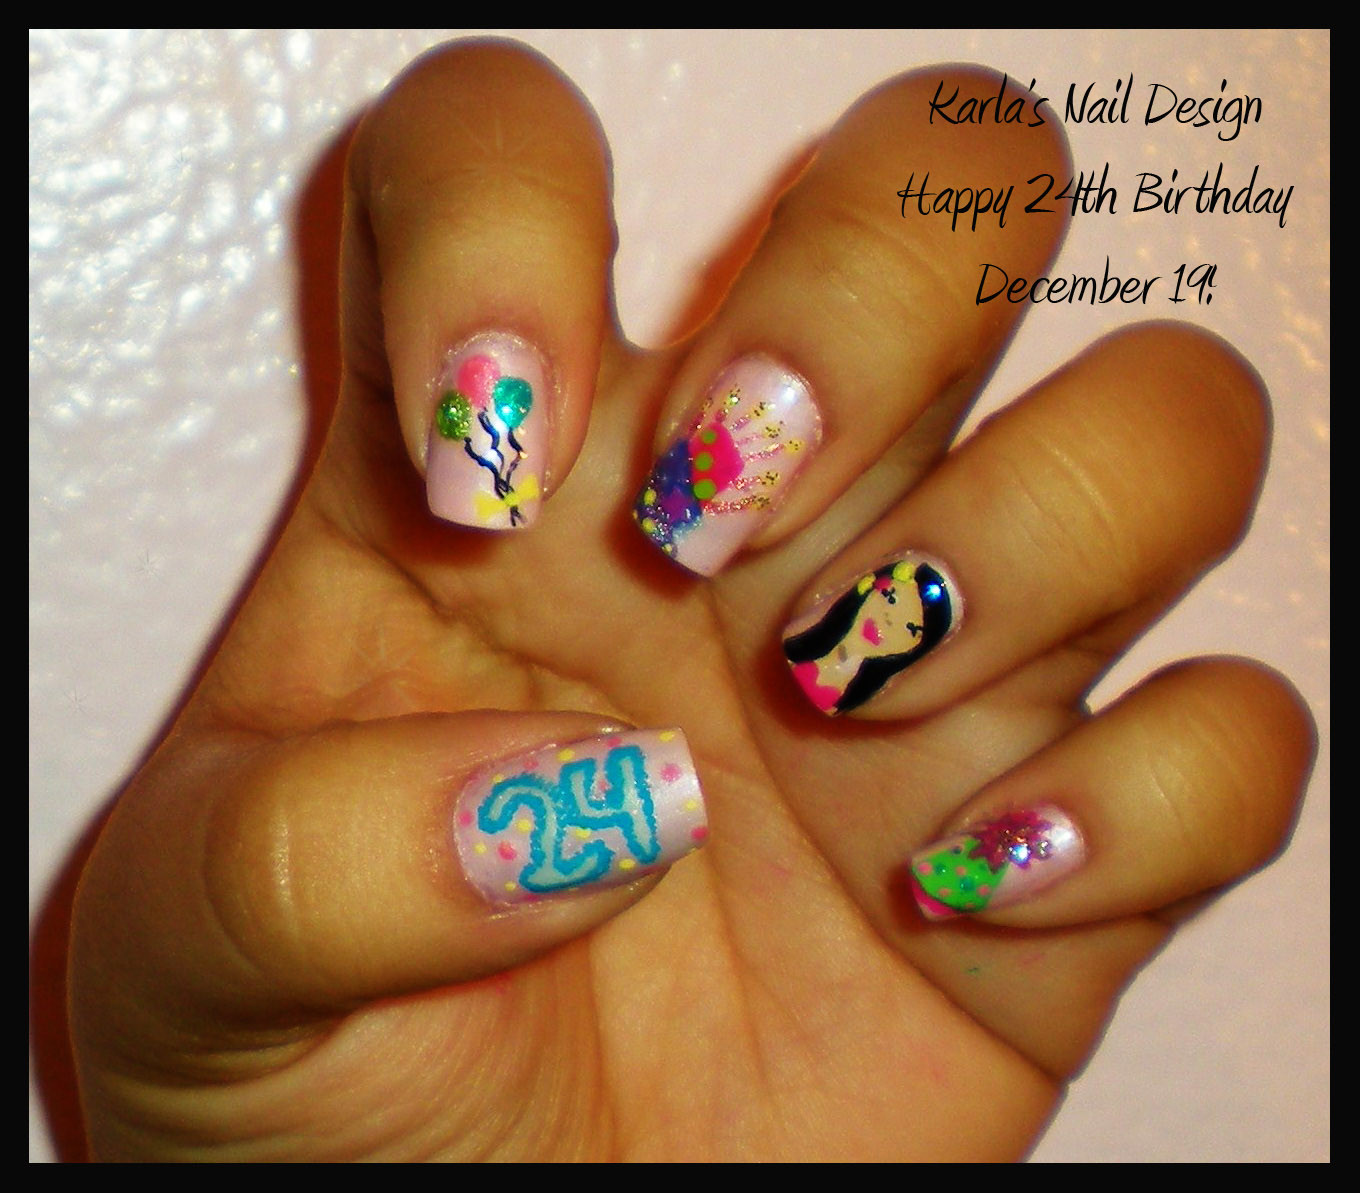 Happy Birthday Nail Designs
 Originail Kolors My 24th birthday Nail Design